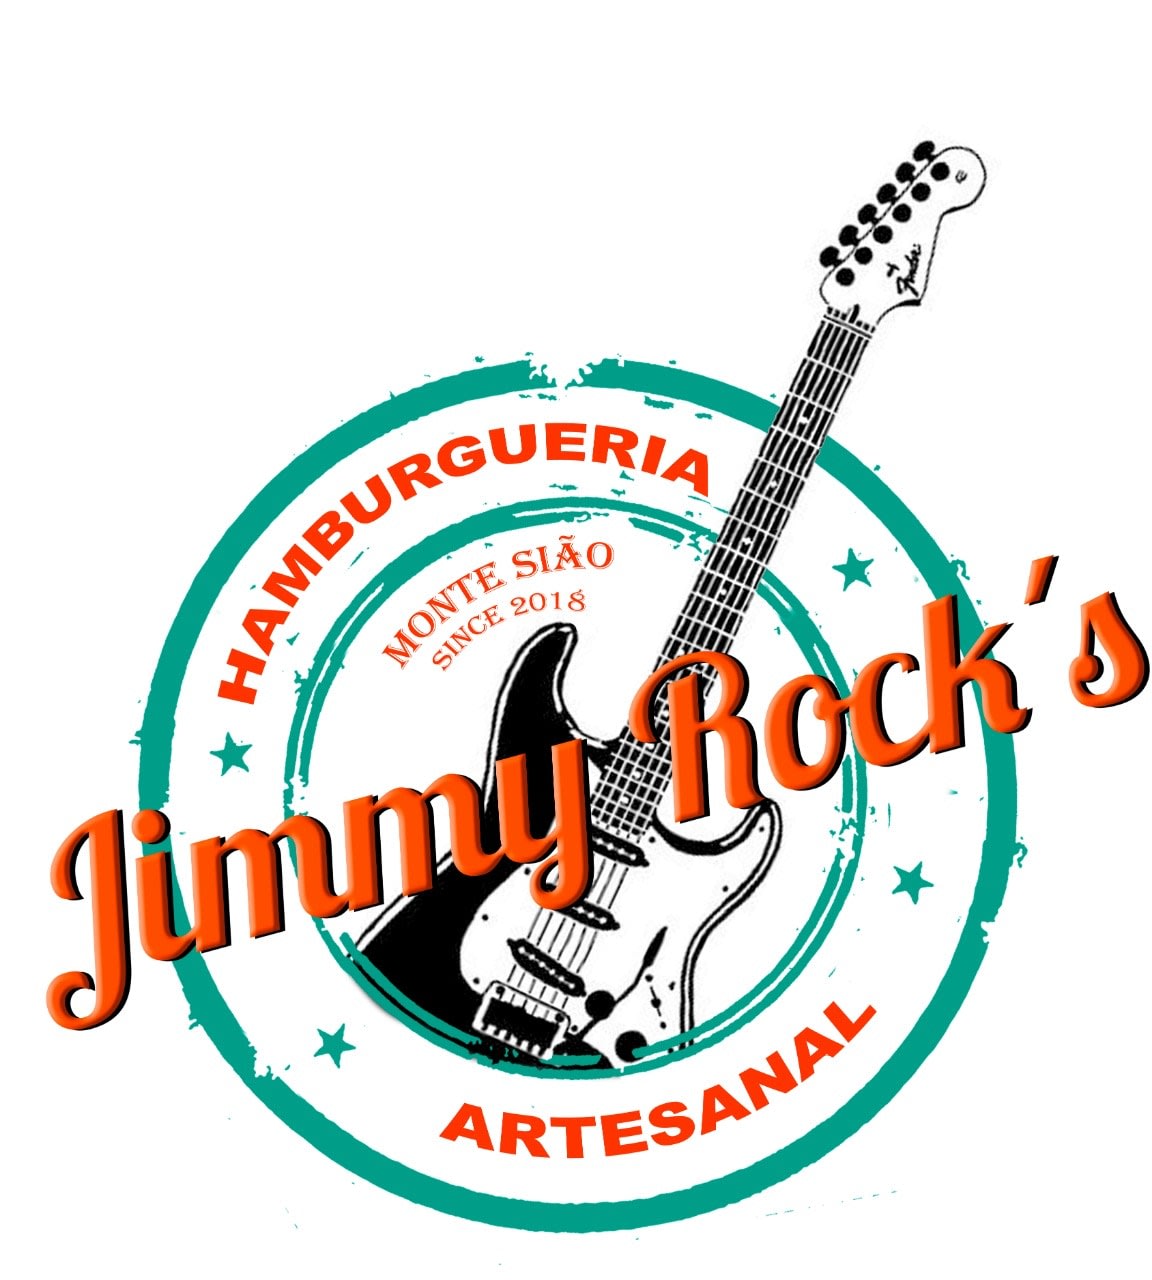 Jimmy Rock’s Hamburgueria